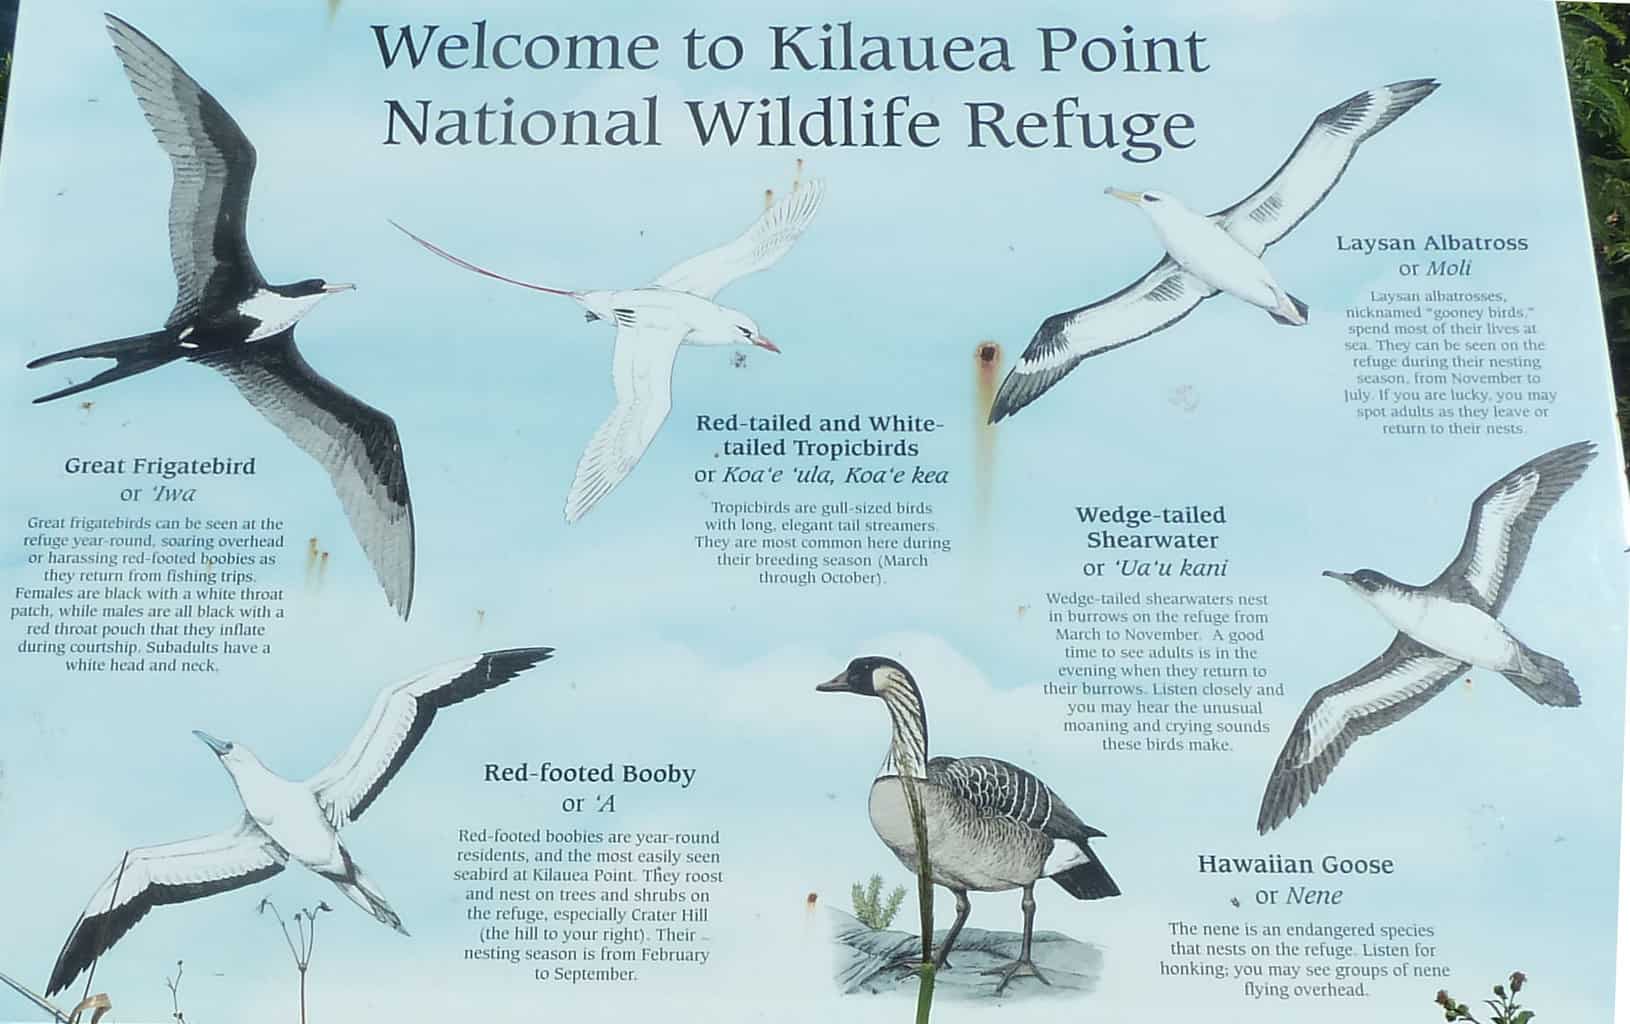 Kilauea LIghthouse